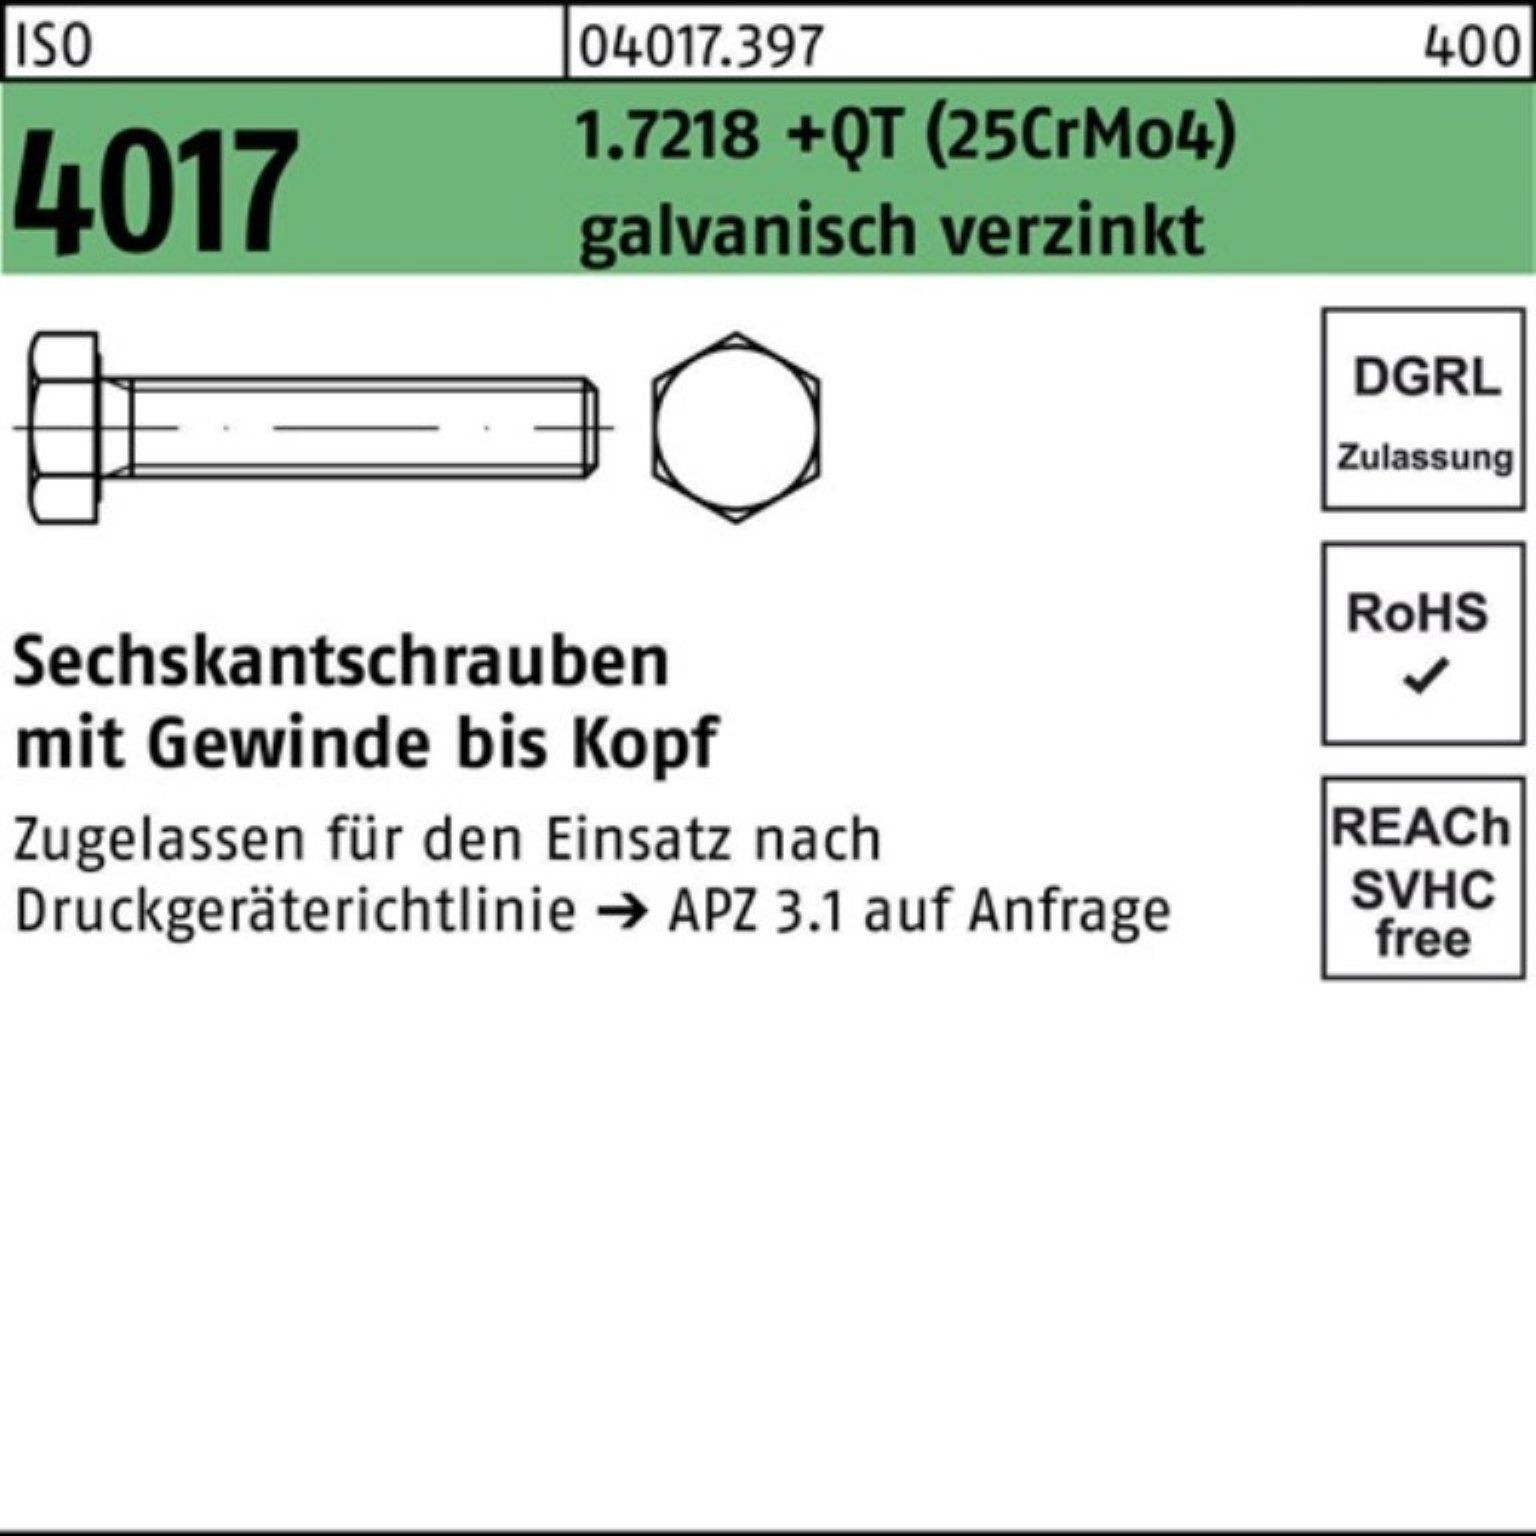 M27x120 (25CrMo4) 1.7218 VG Bufab Sechskantschraube Pack 100er +QT ISO Sechskantschraube 4017